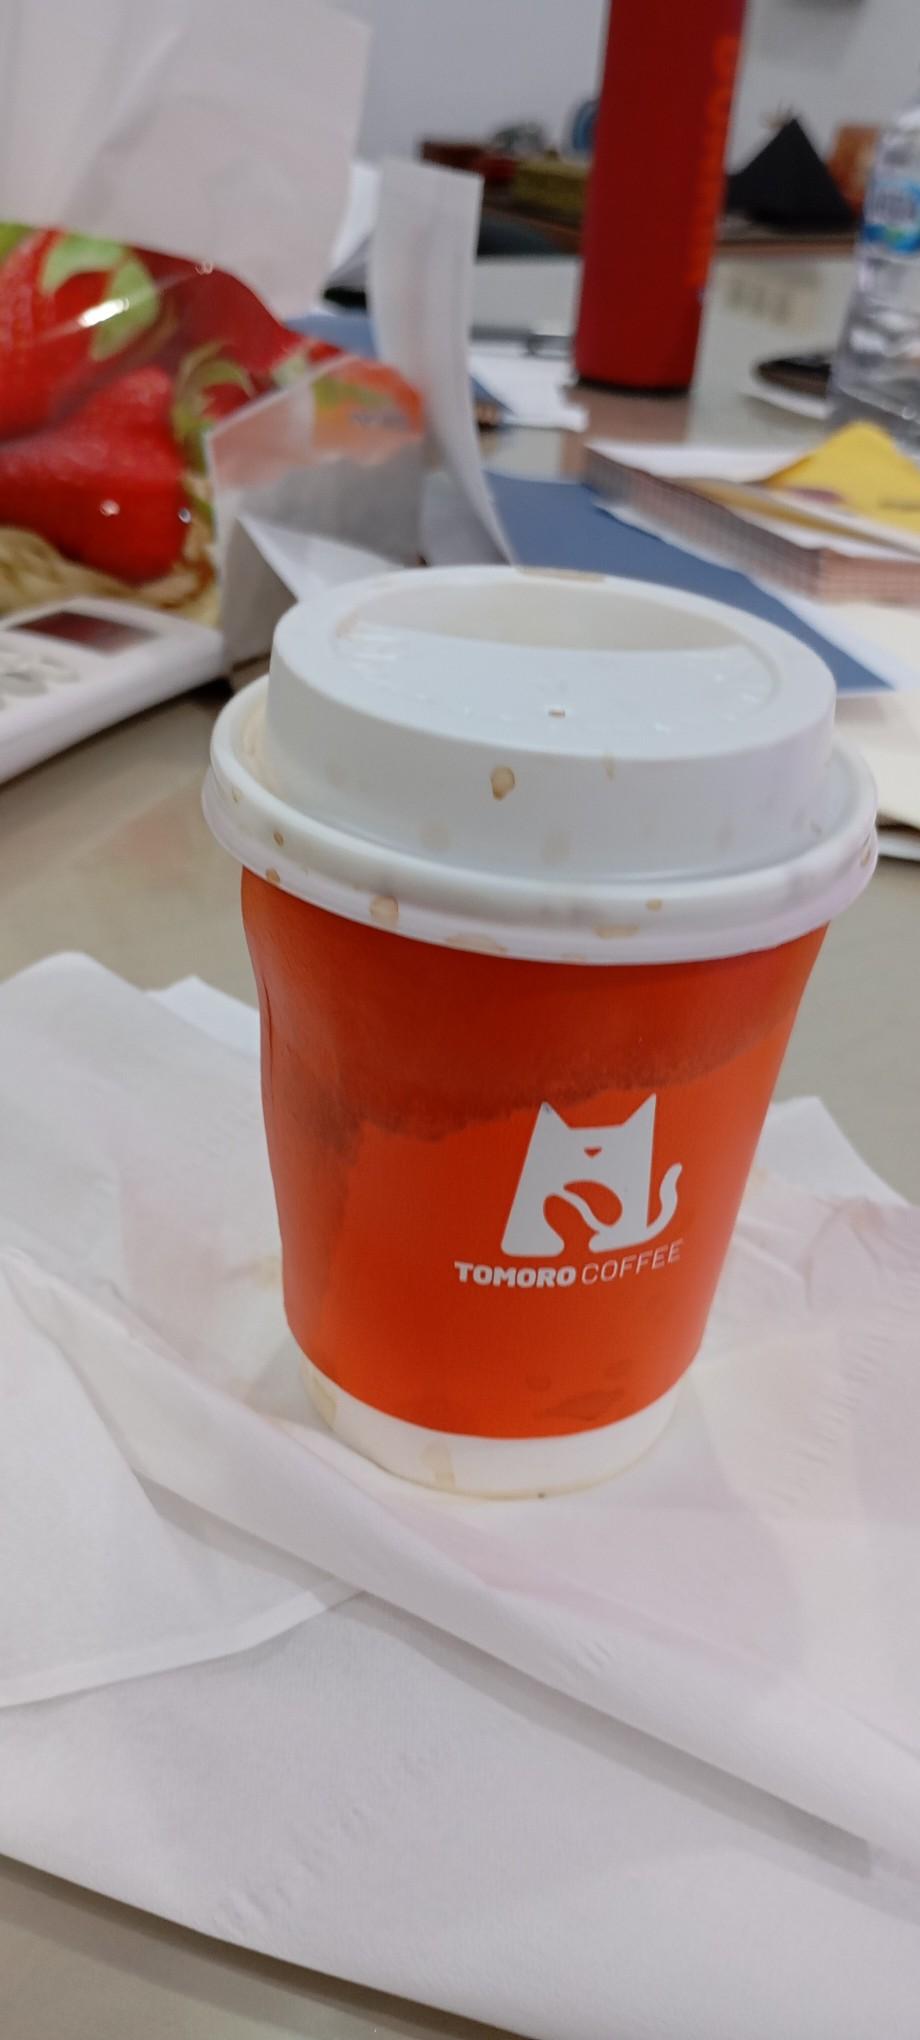 Tomoro Coffee - Metro Pasar Baru review